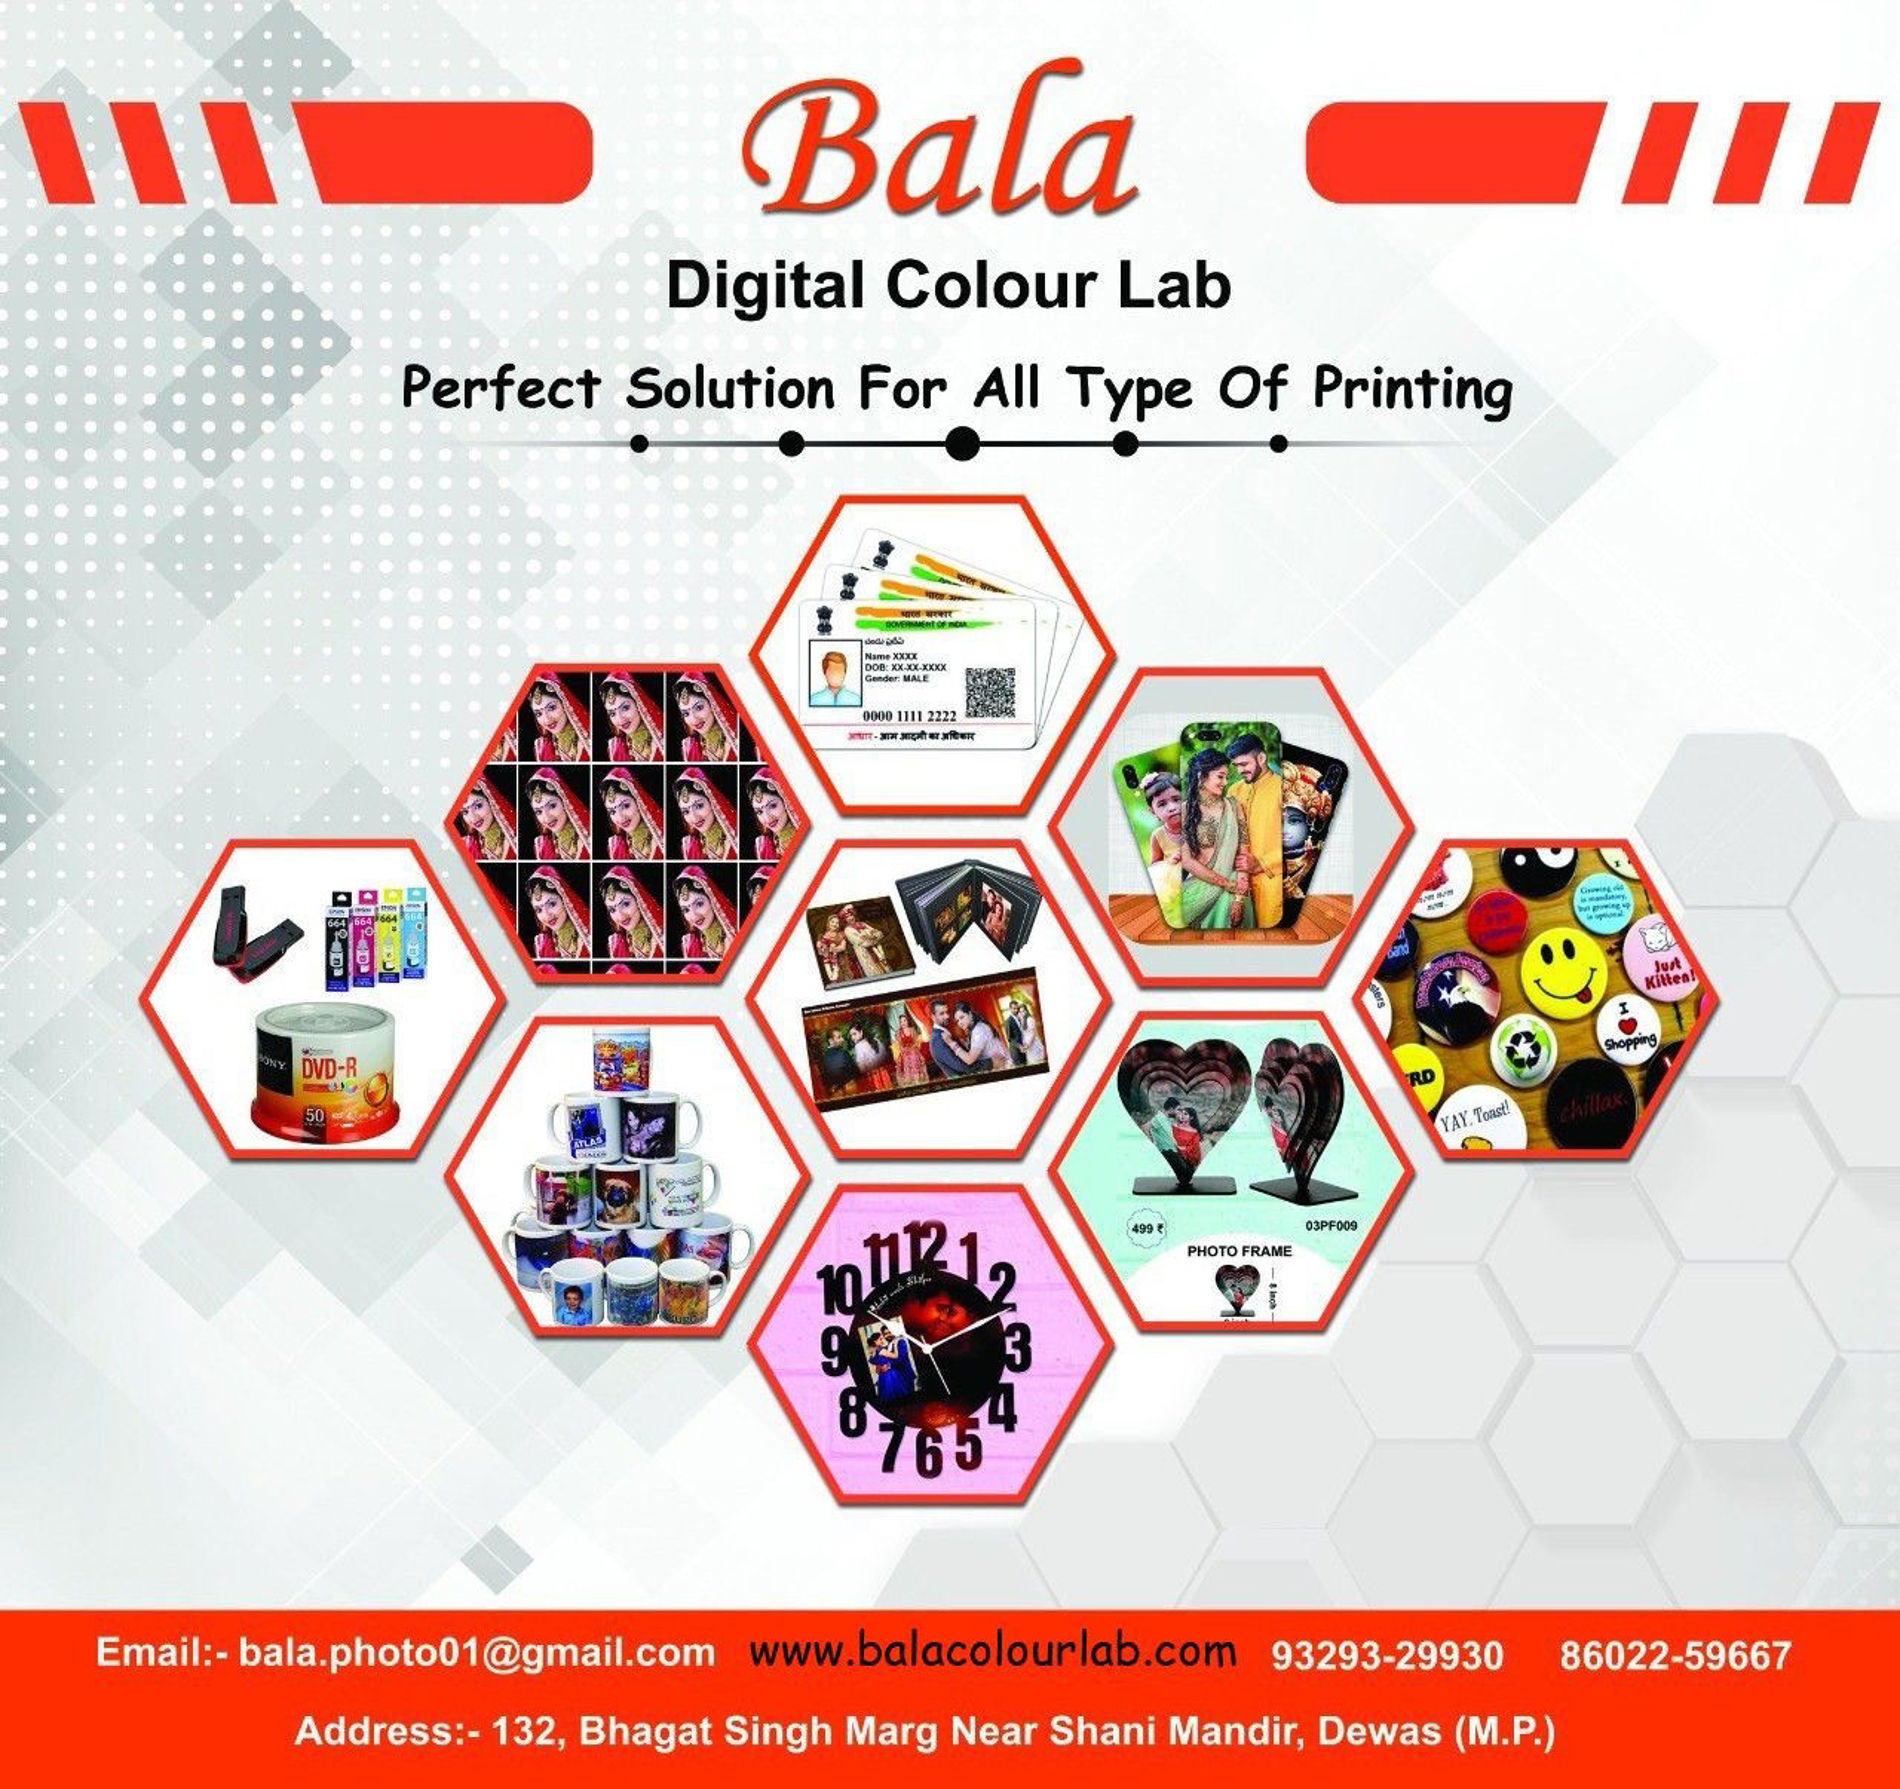 Bala Digital Colour Lab